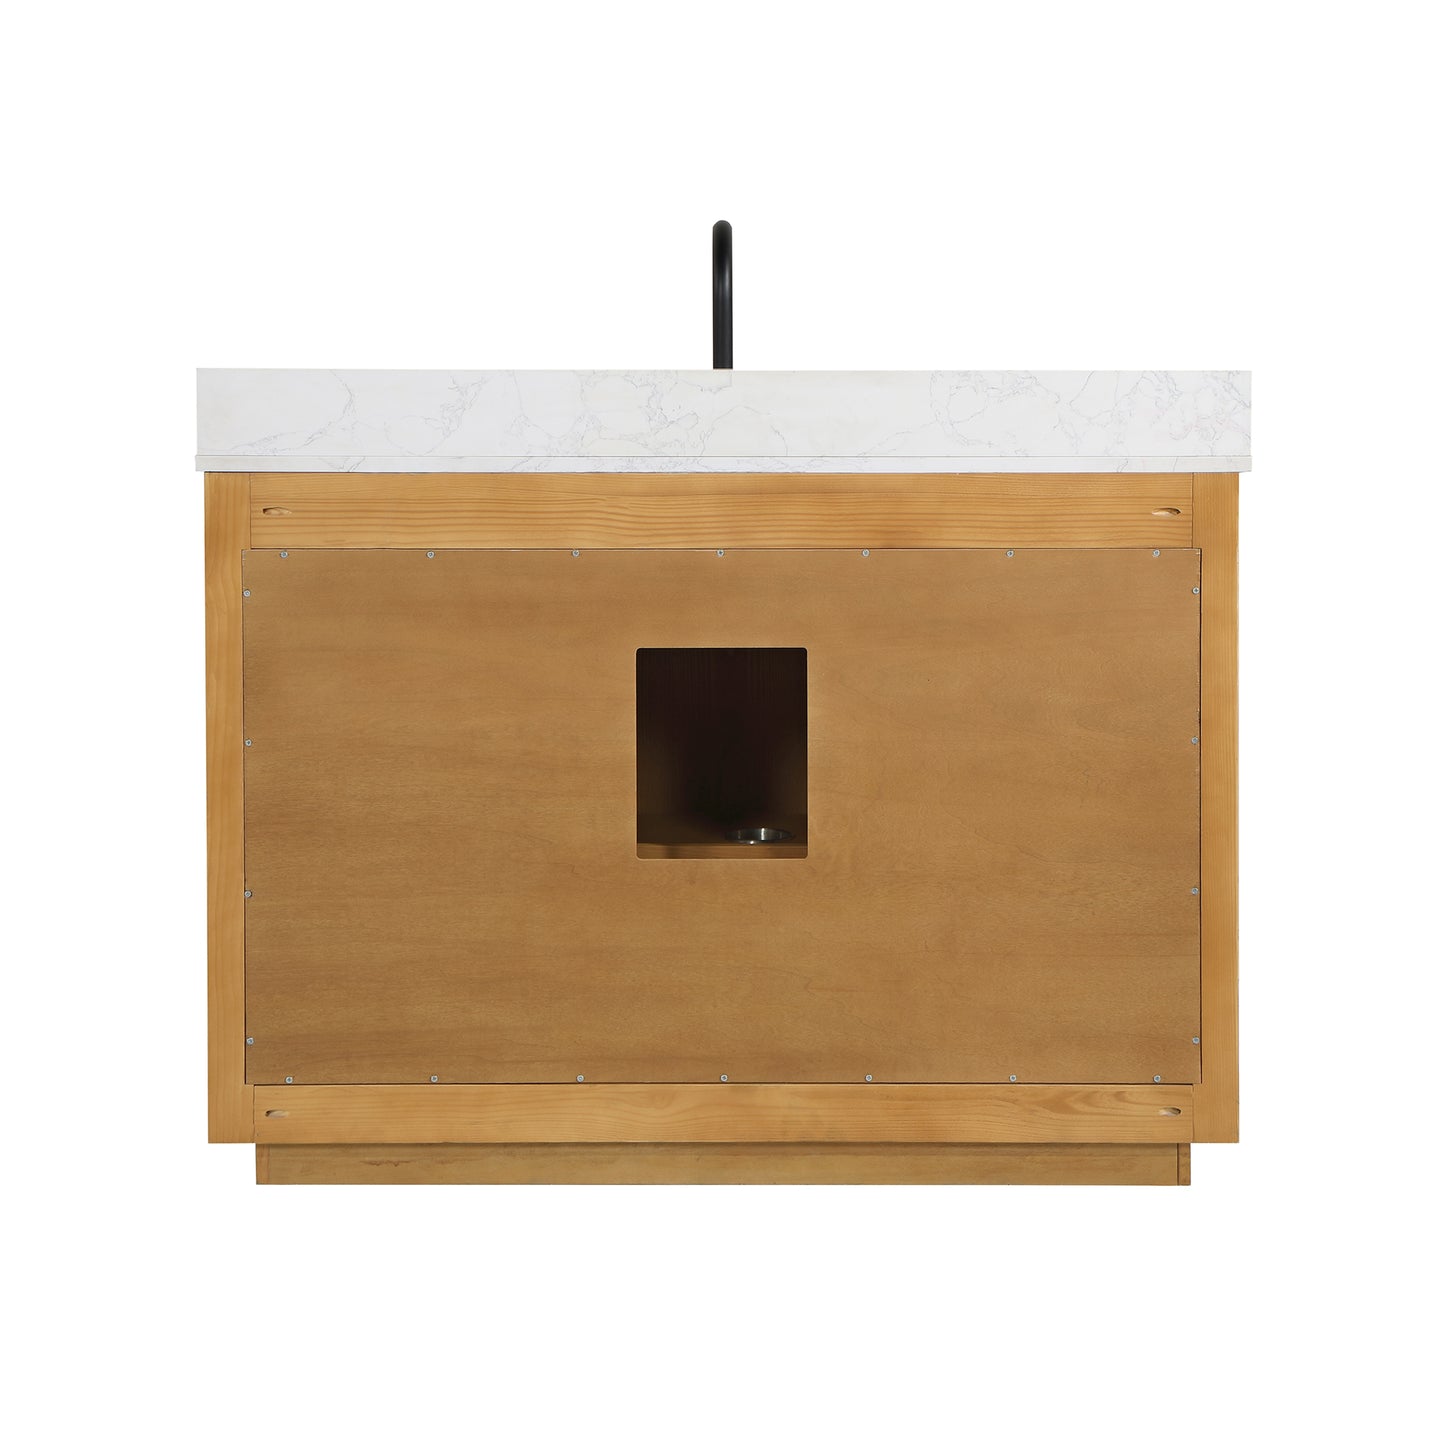 Perla 48" Single Bathroom Vanity in Natural Wood with Grain White Composite Stone Countertop